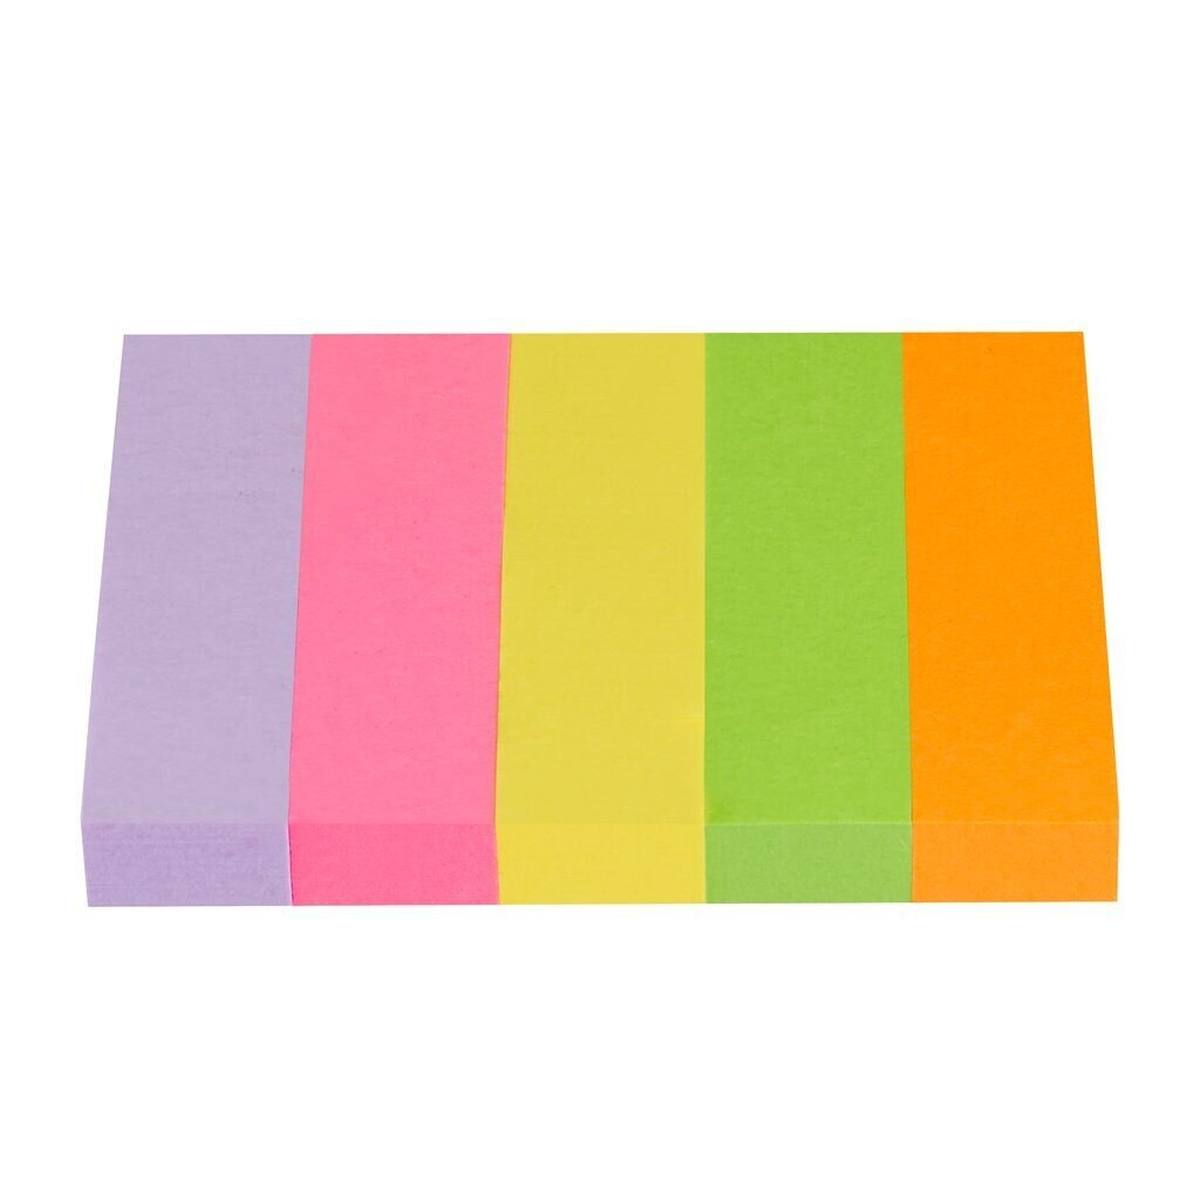 3M Post-it Page Marker 670-5, 15 mm x 50 mm, jaune fluo, vert fluo, orange fluo, rose fluo, violet, 5 x 100 feuilles